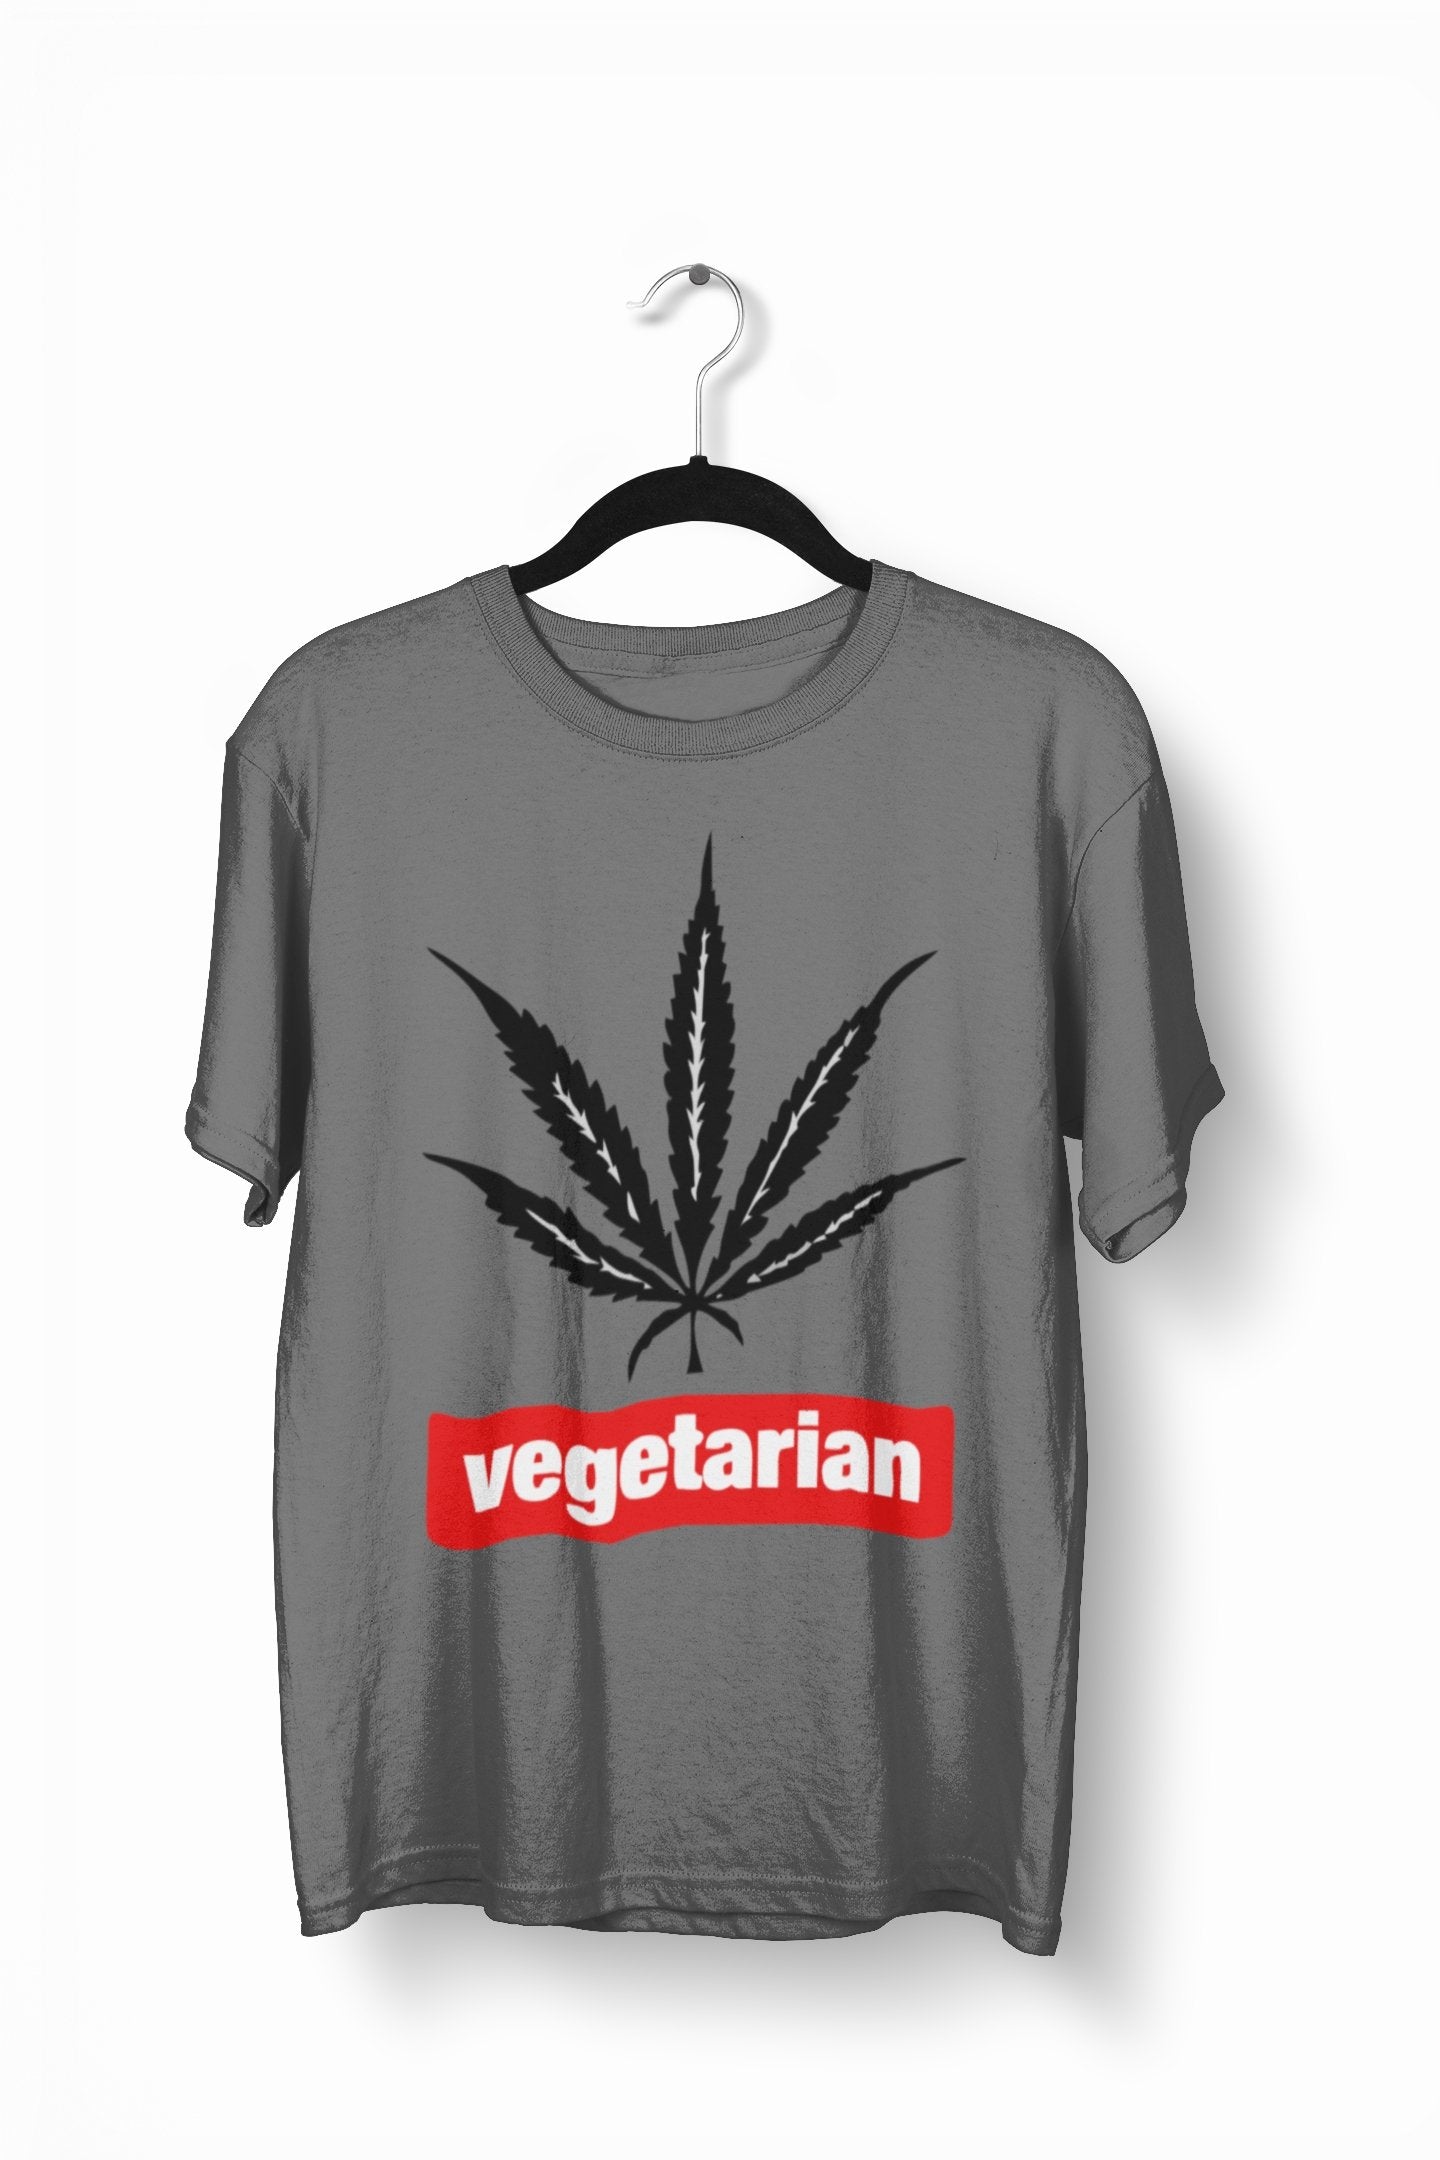 thelegalgang,Stoner Vegetarian Design T shirt,MEN.